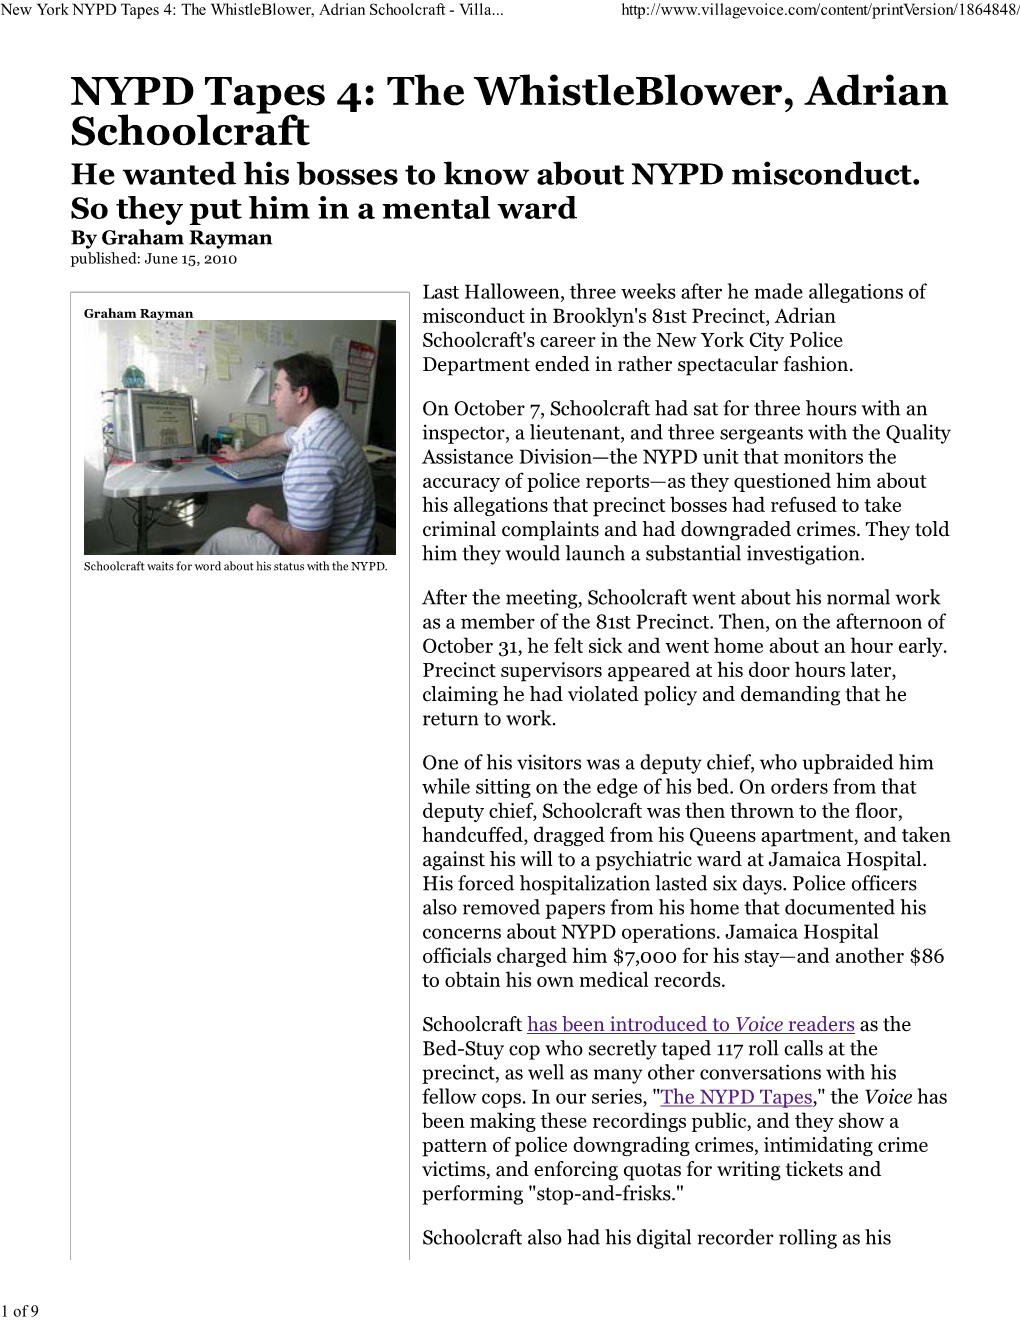 New York NYPD Tapes 4: the Whistleblower, Adrian Schoolcraft - Villa